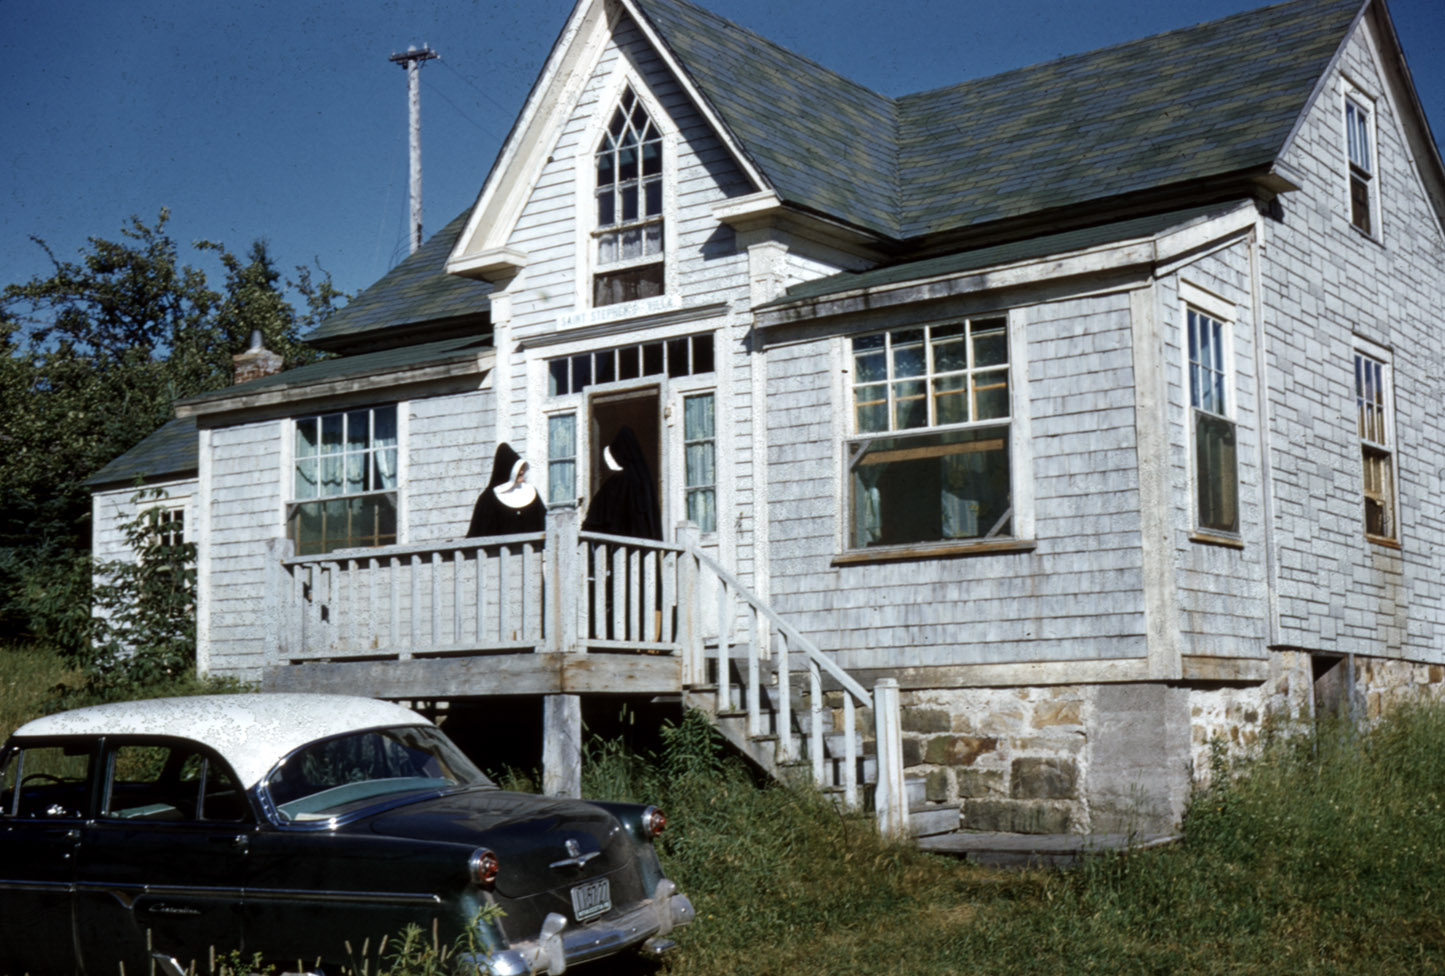 communityalbums - Sisters of Charity-Halifax and car in front of Saint Stephen Villa, Beaver Cove, Cape Breton, Nova Scotia.